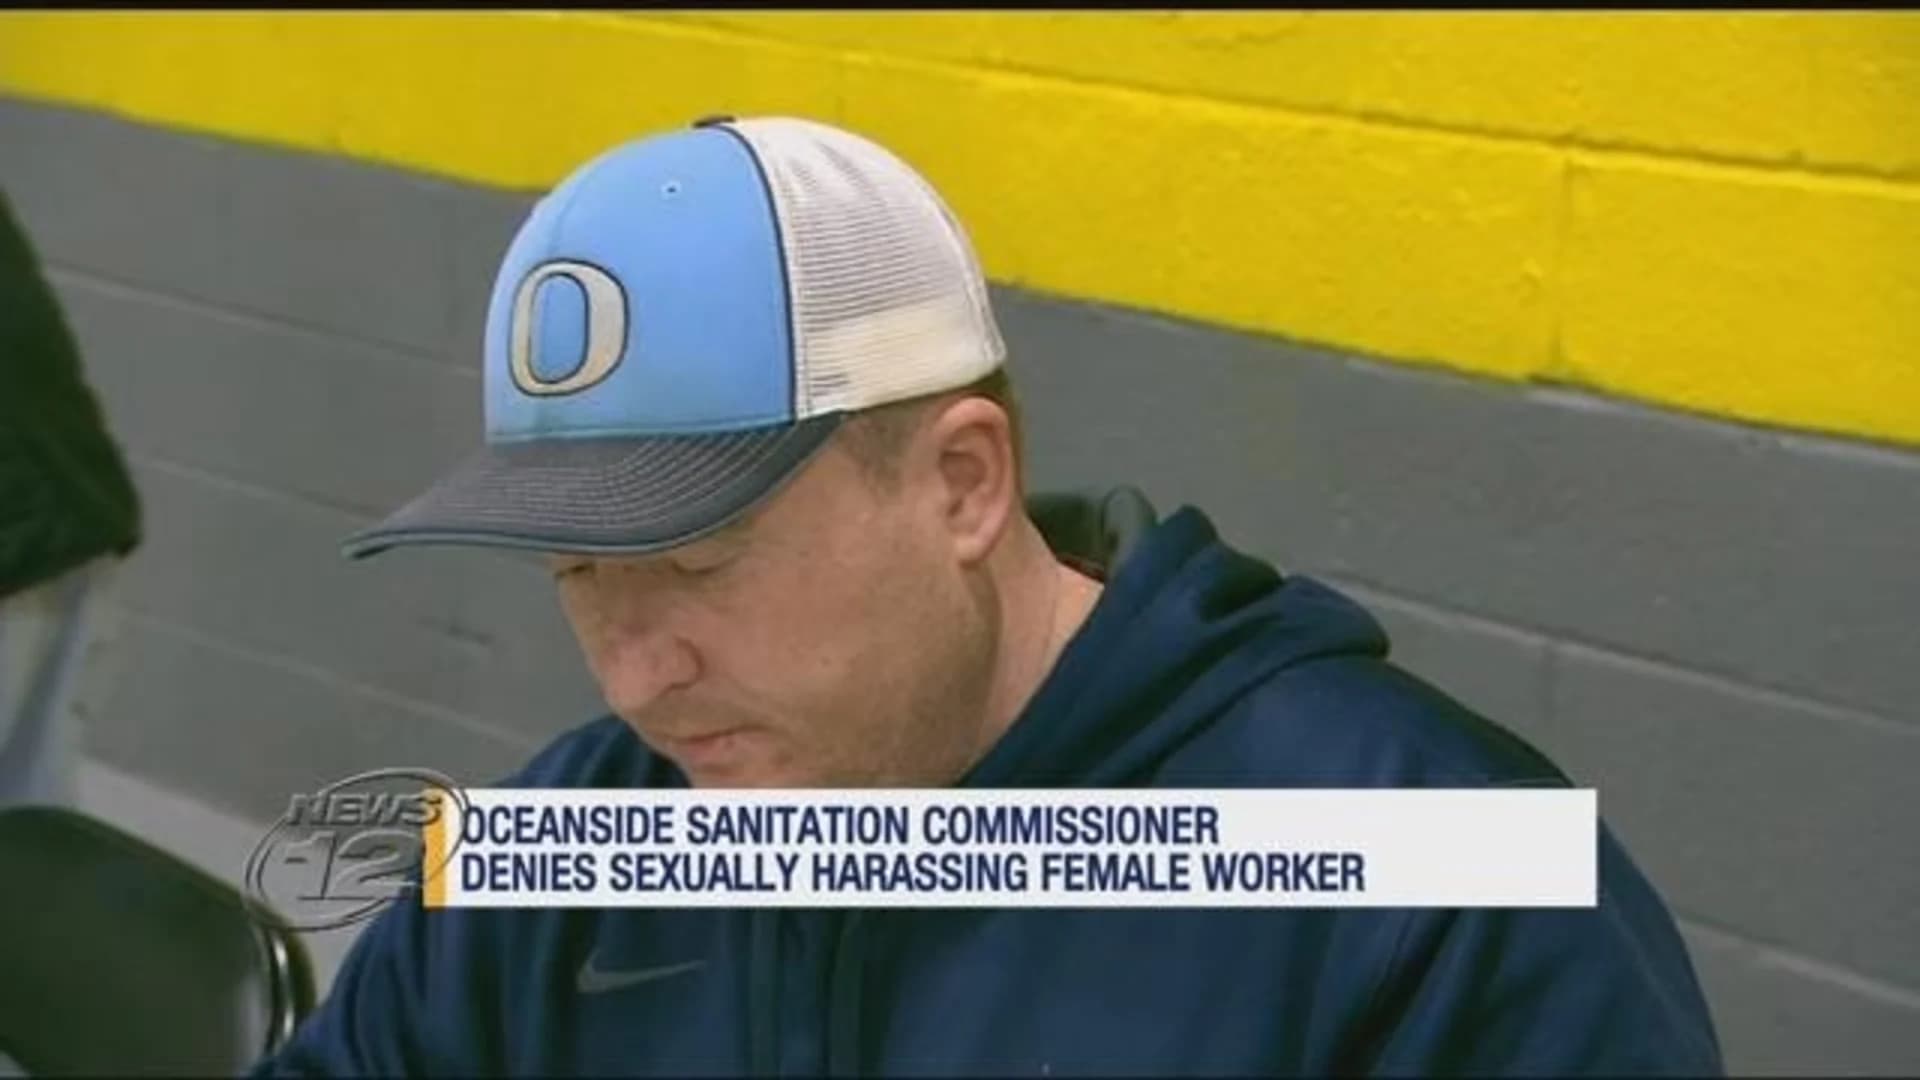 Oceanside sanitation commissioner denies sexual harassment claim